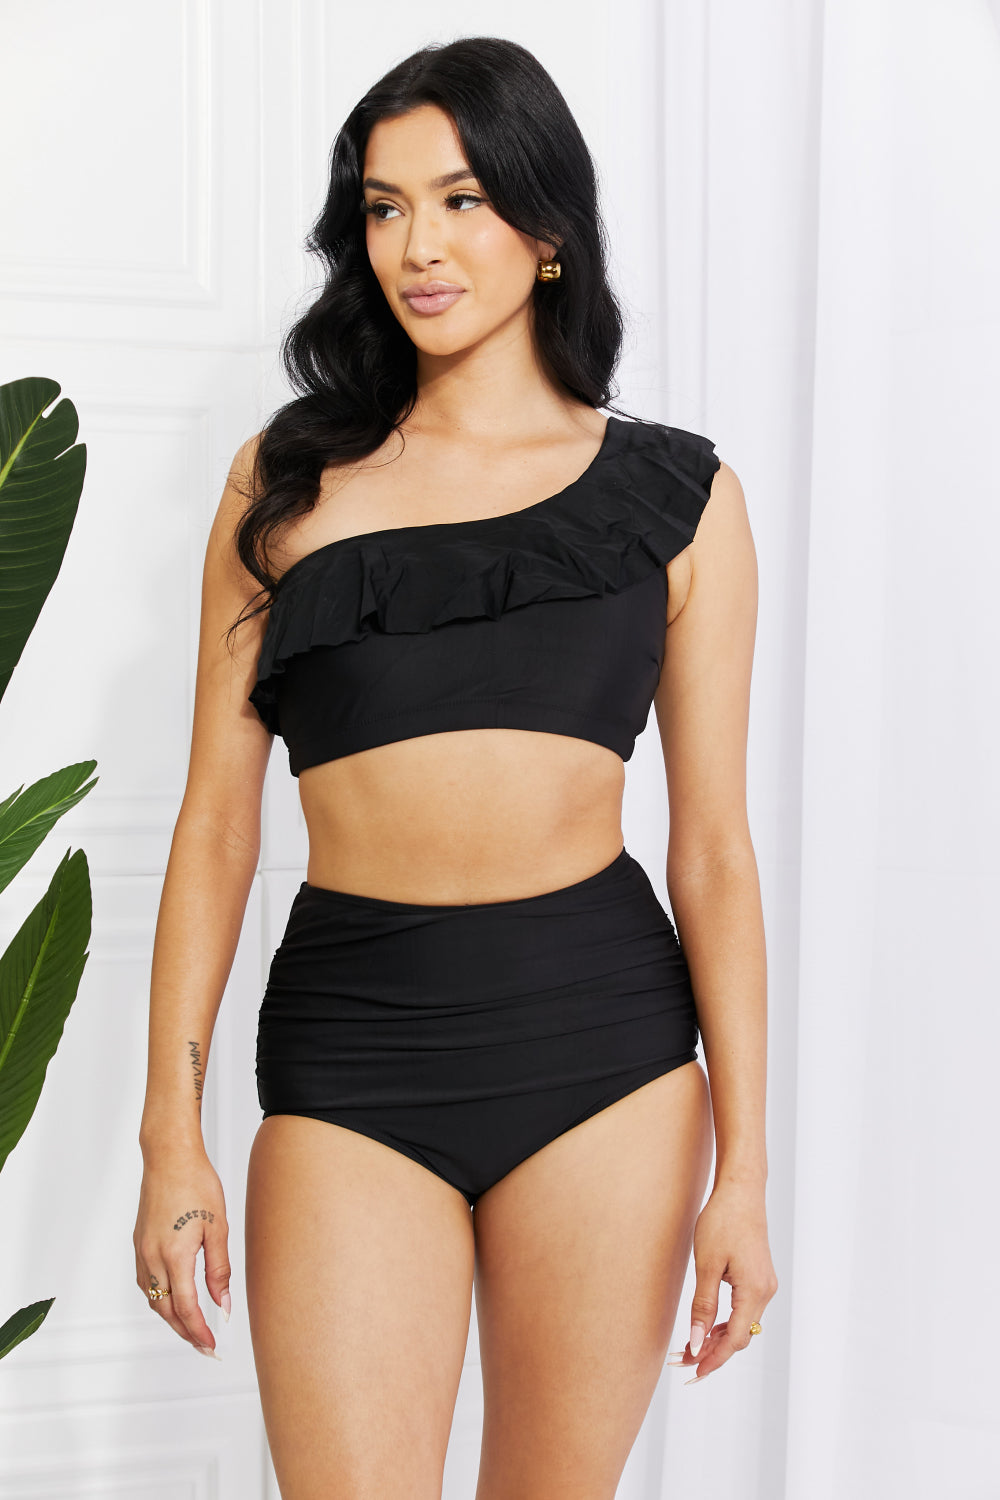 Marina West Swim Seaside Romance Ruffle One-Shoulder Bikini in Black - Bikinis & Tankinis - FITGGINS